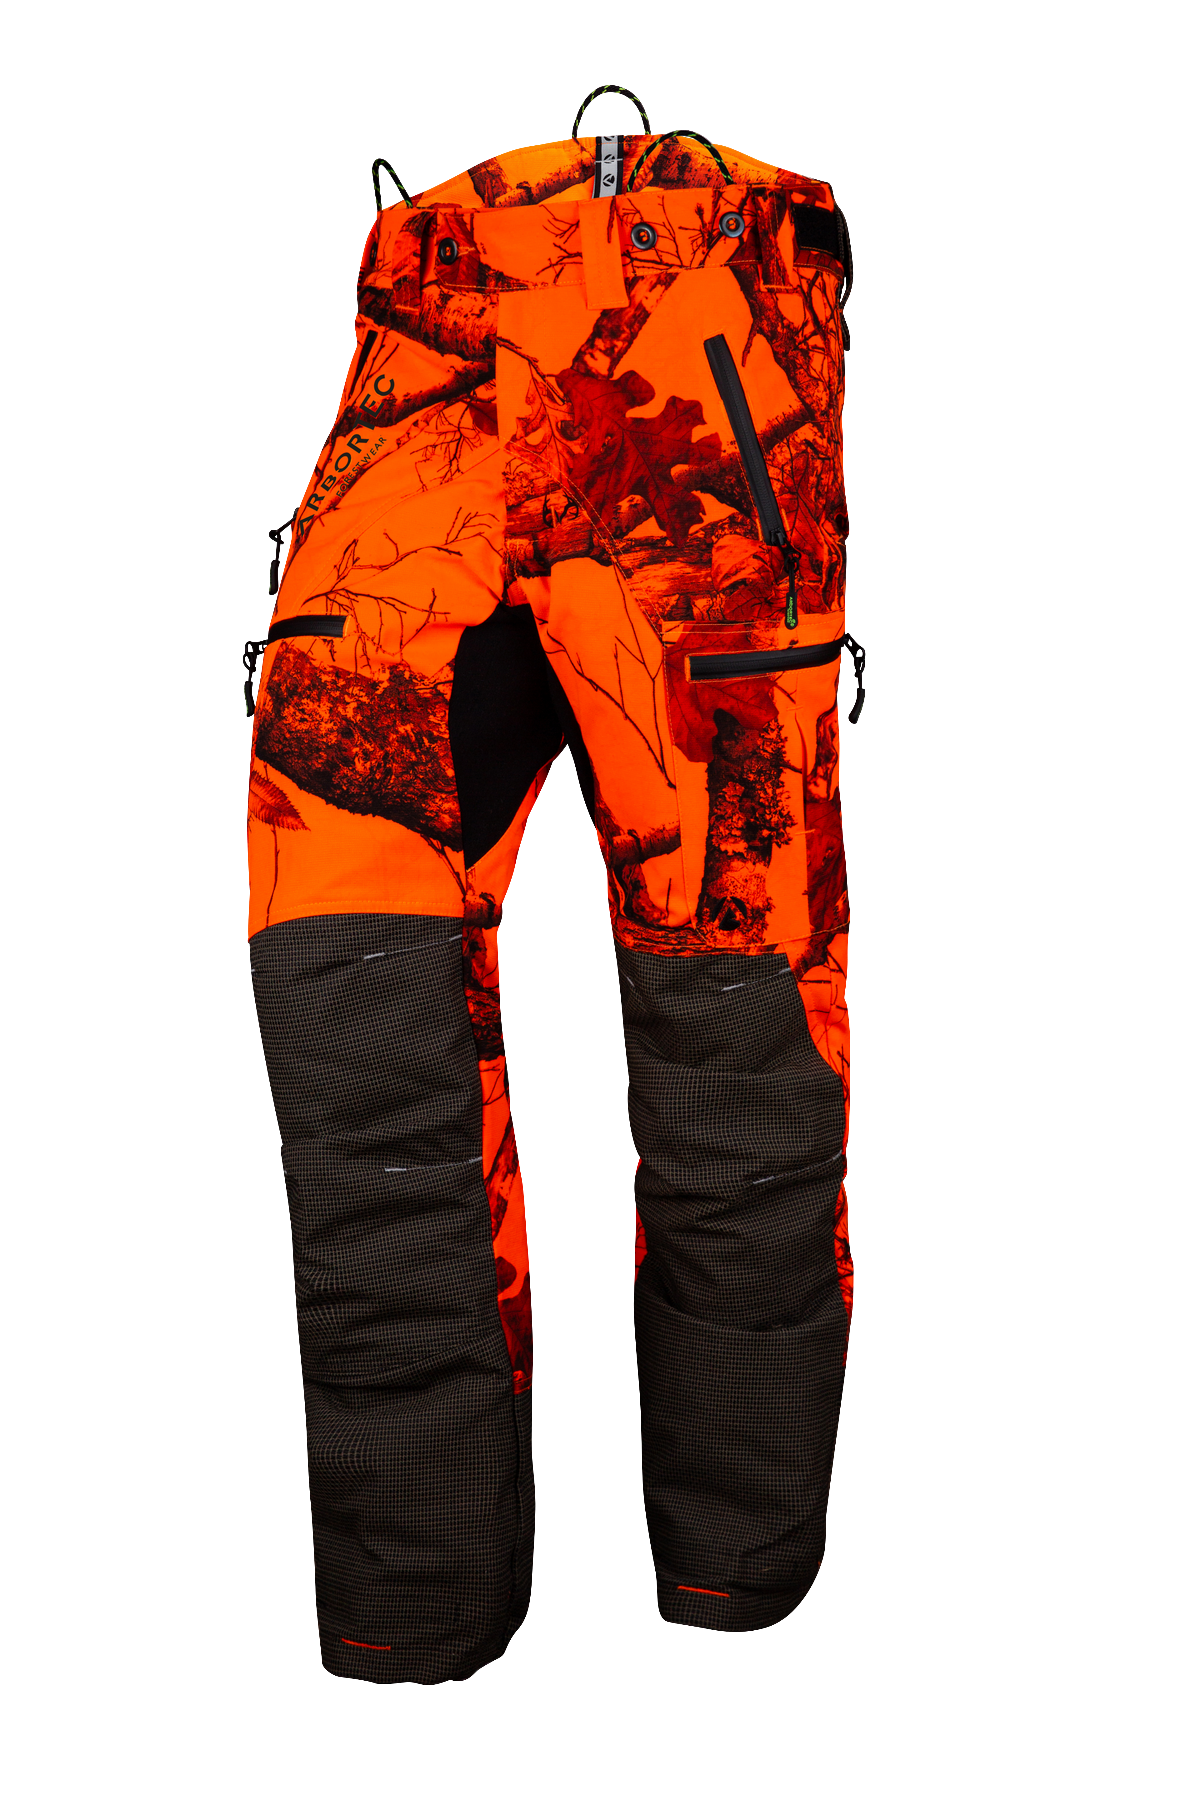 AT4060 - Breatheflex Pro Realtree Chainsaw Trousers Design A/Class 1 - Orange